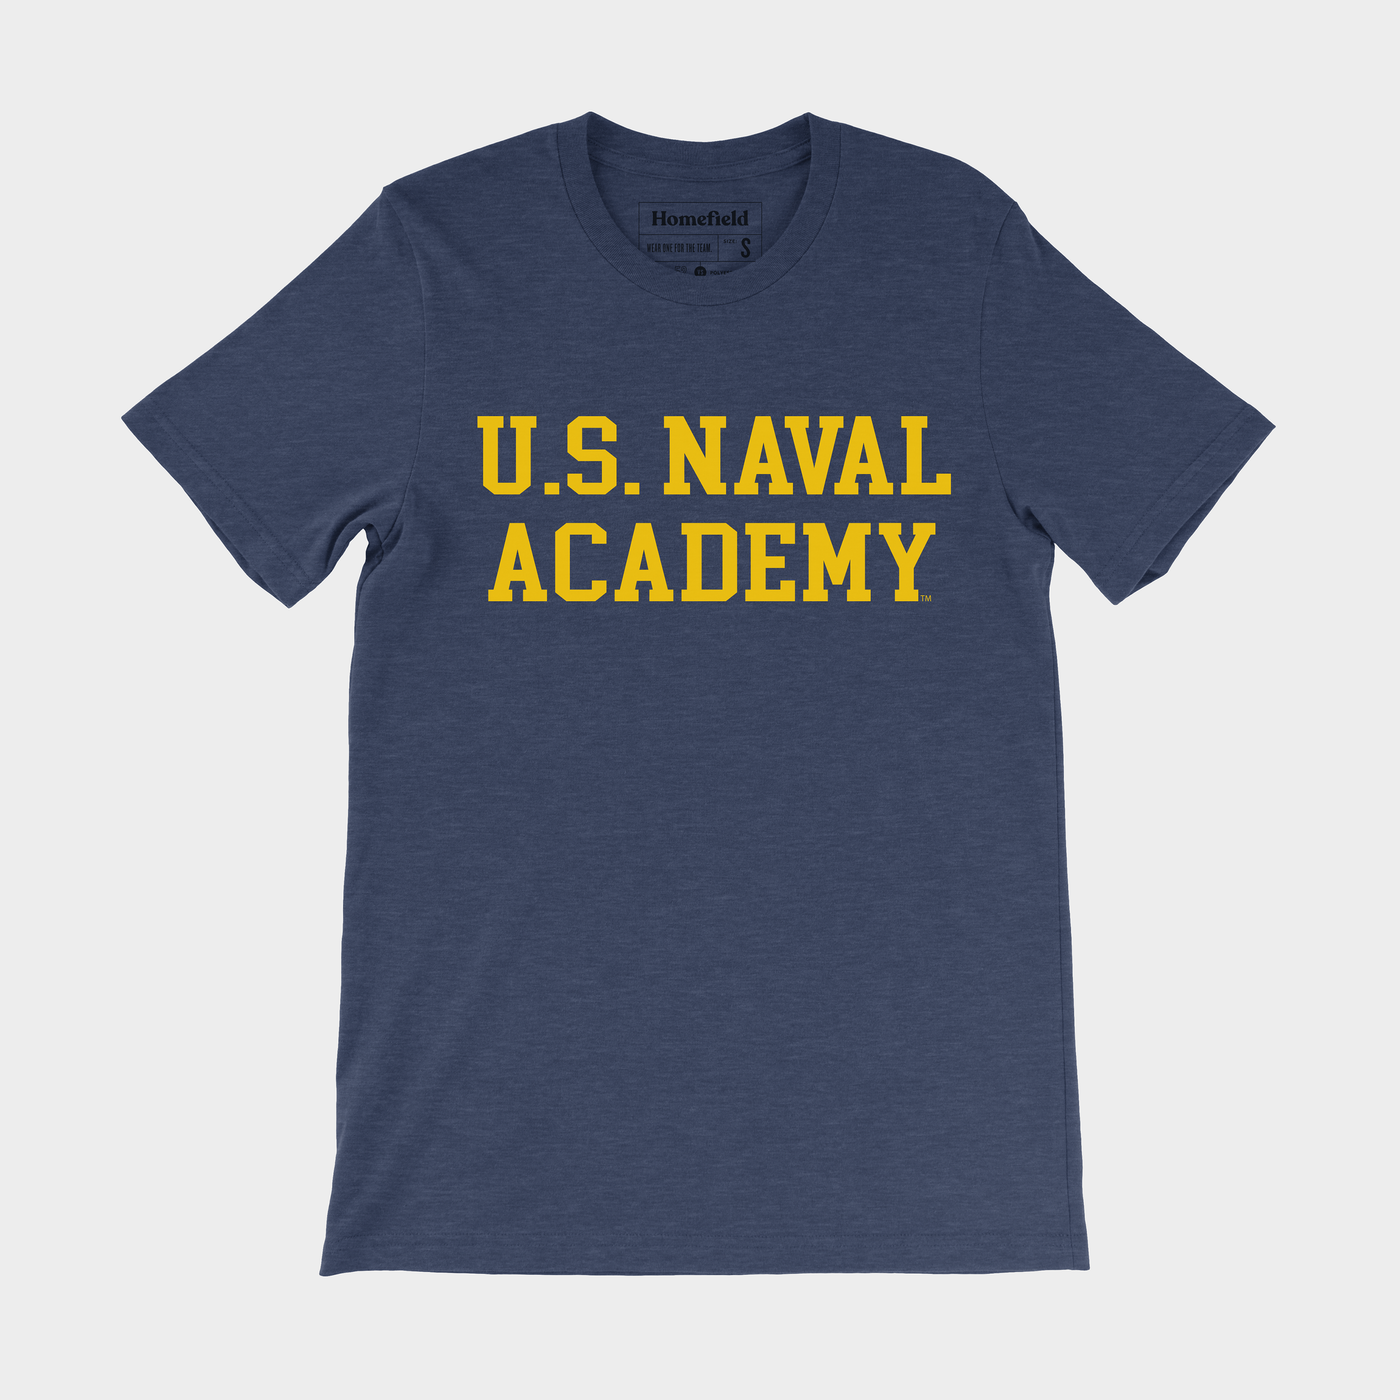 U.S. Naval Academy Tee